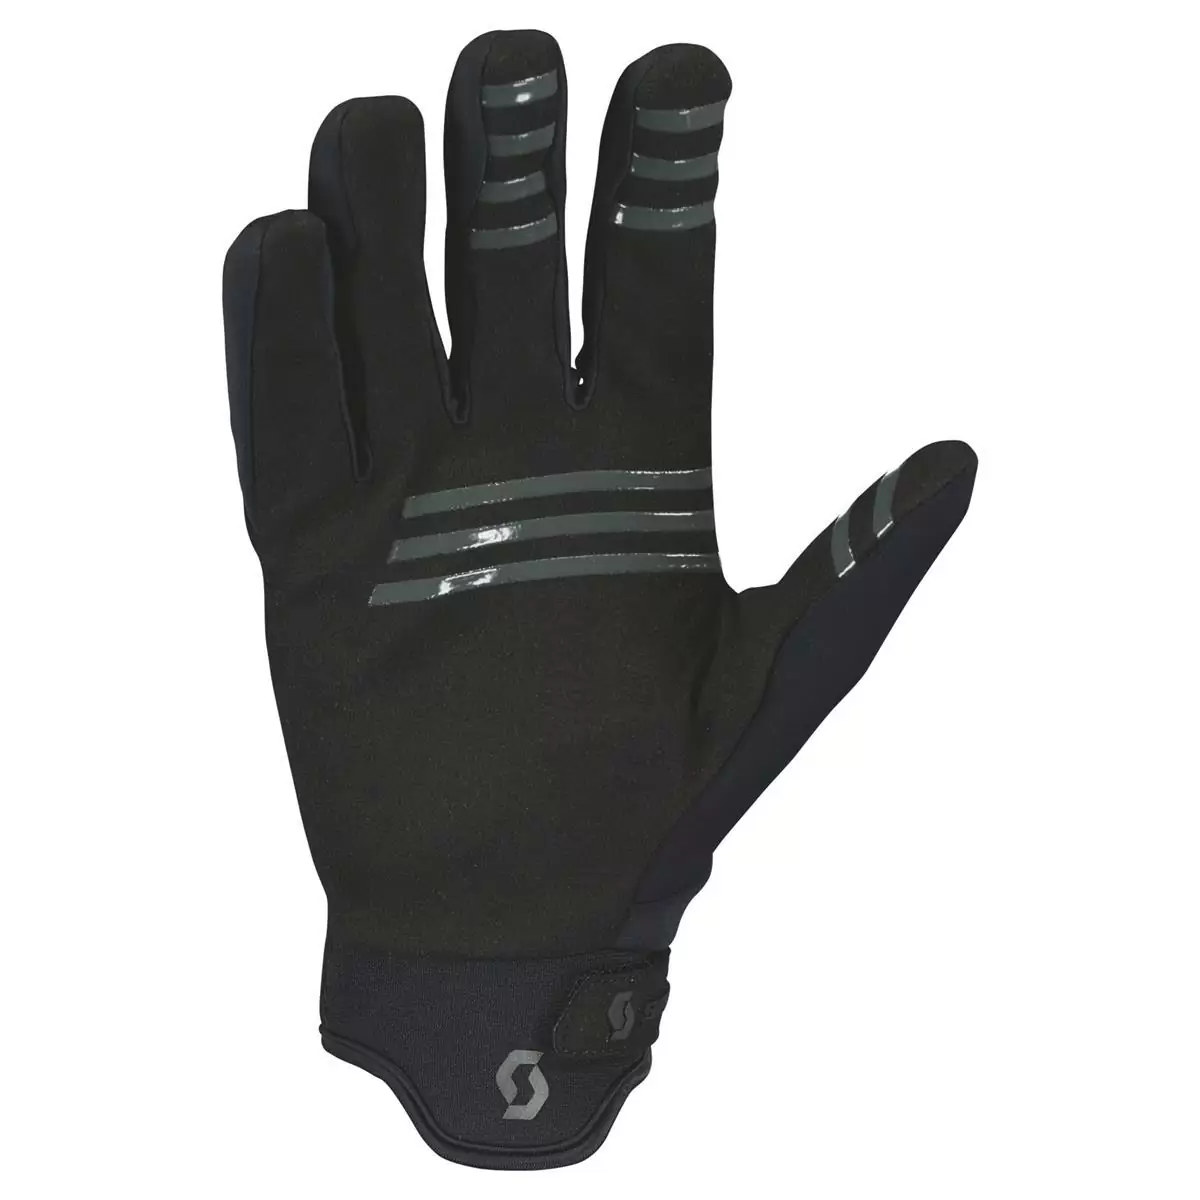 Neoride MTB Winter Gloves Black Size S #2